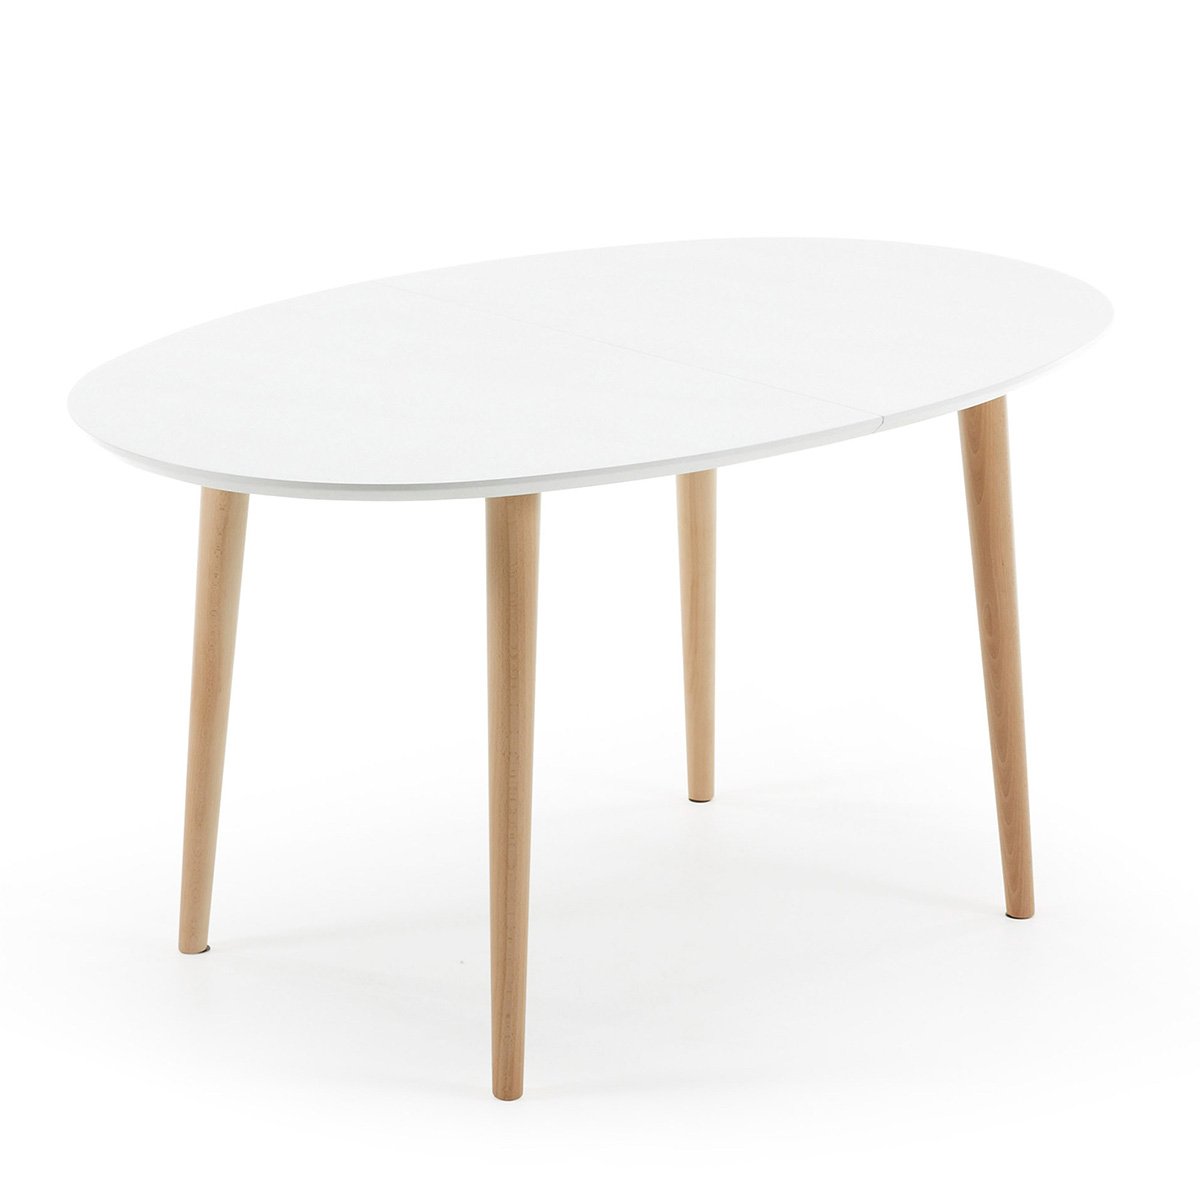 Oqui tavolo allungabile ovale 140/220 cm bianco